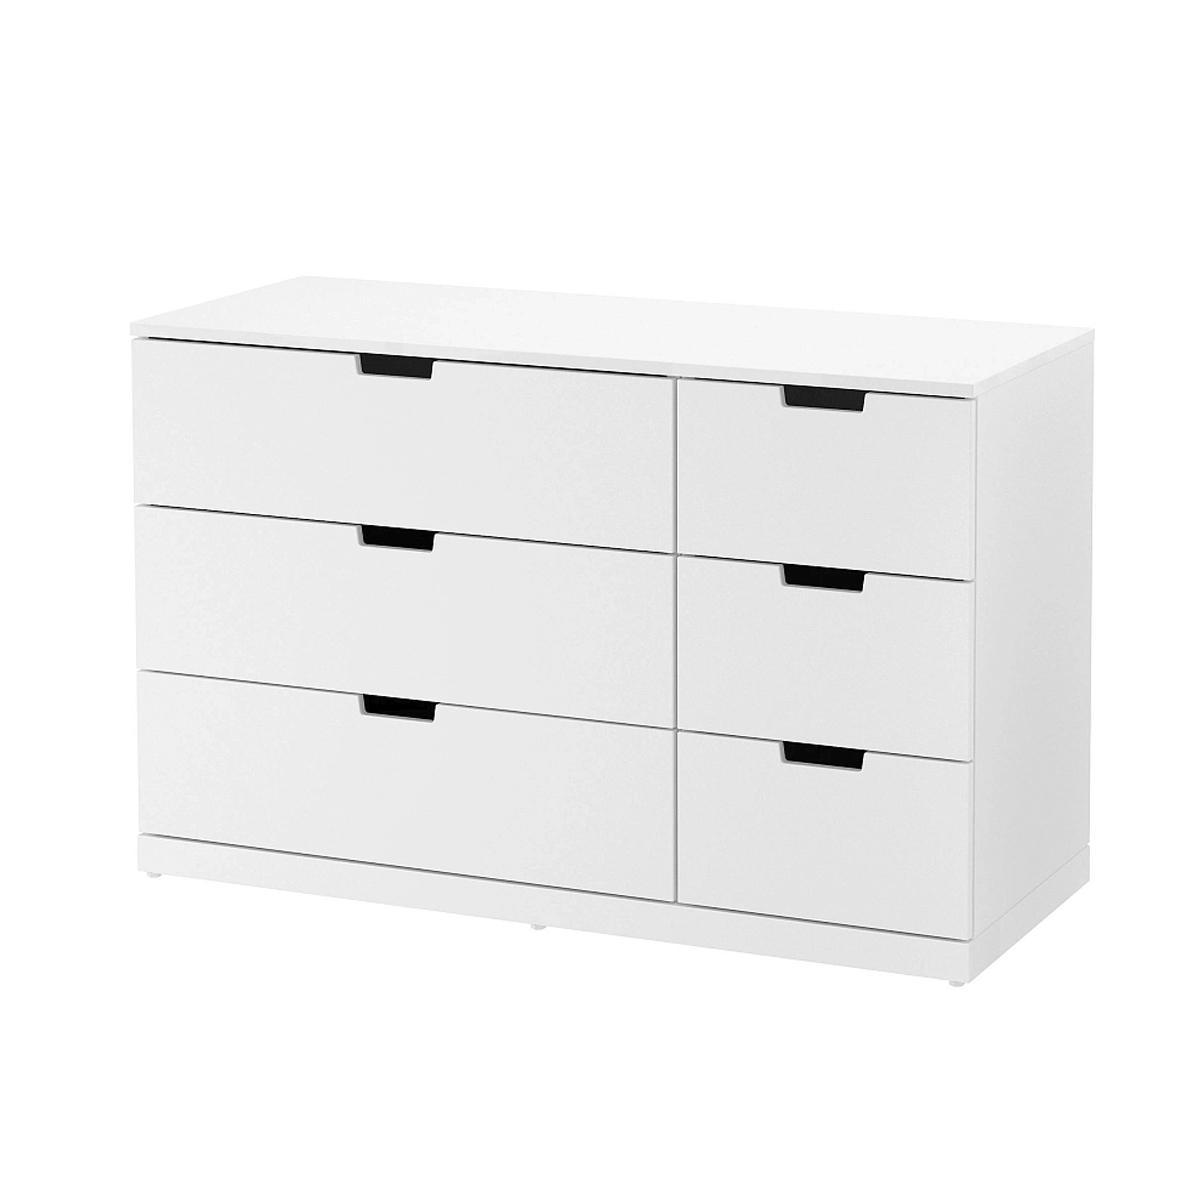 Изображение товара Комод Нордли white ИКЕА (IKEA), 90x45x70 см на сайте adeta.ru